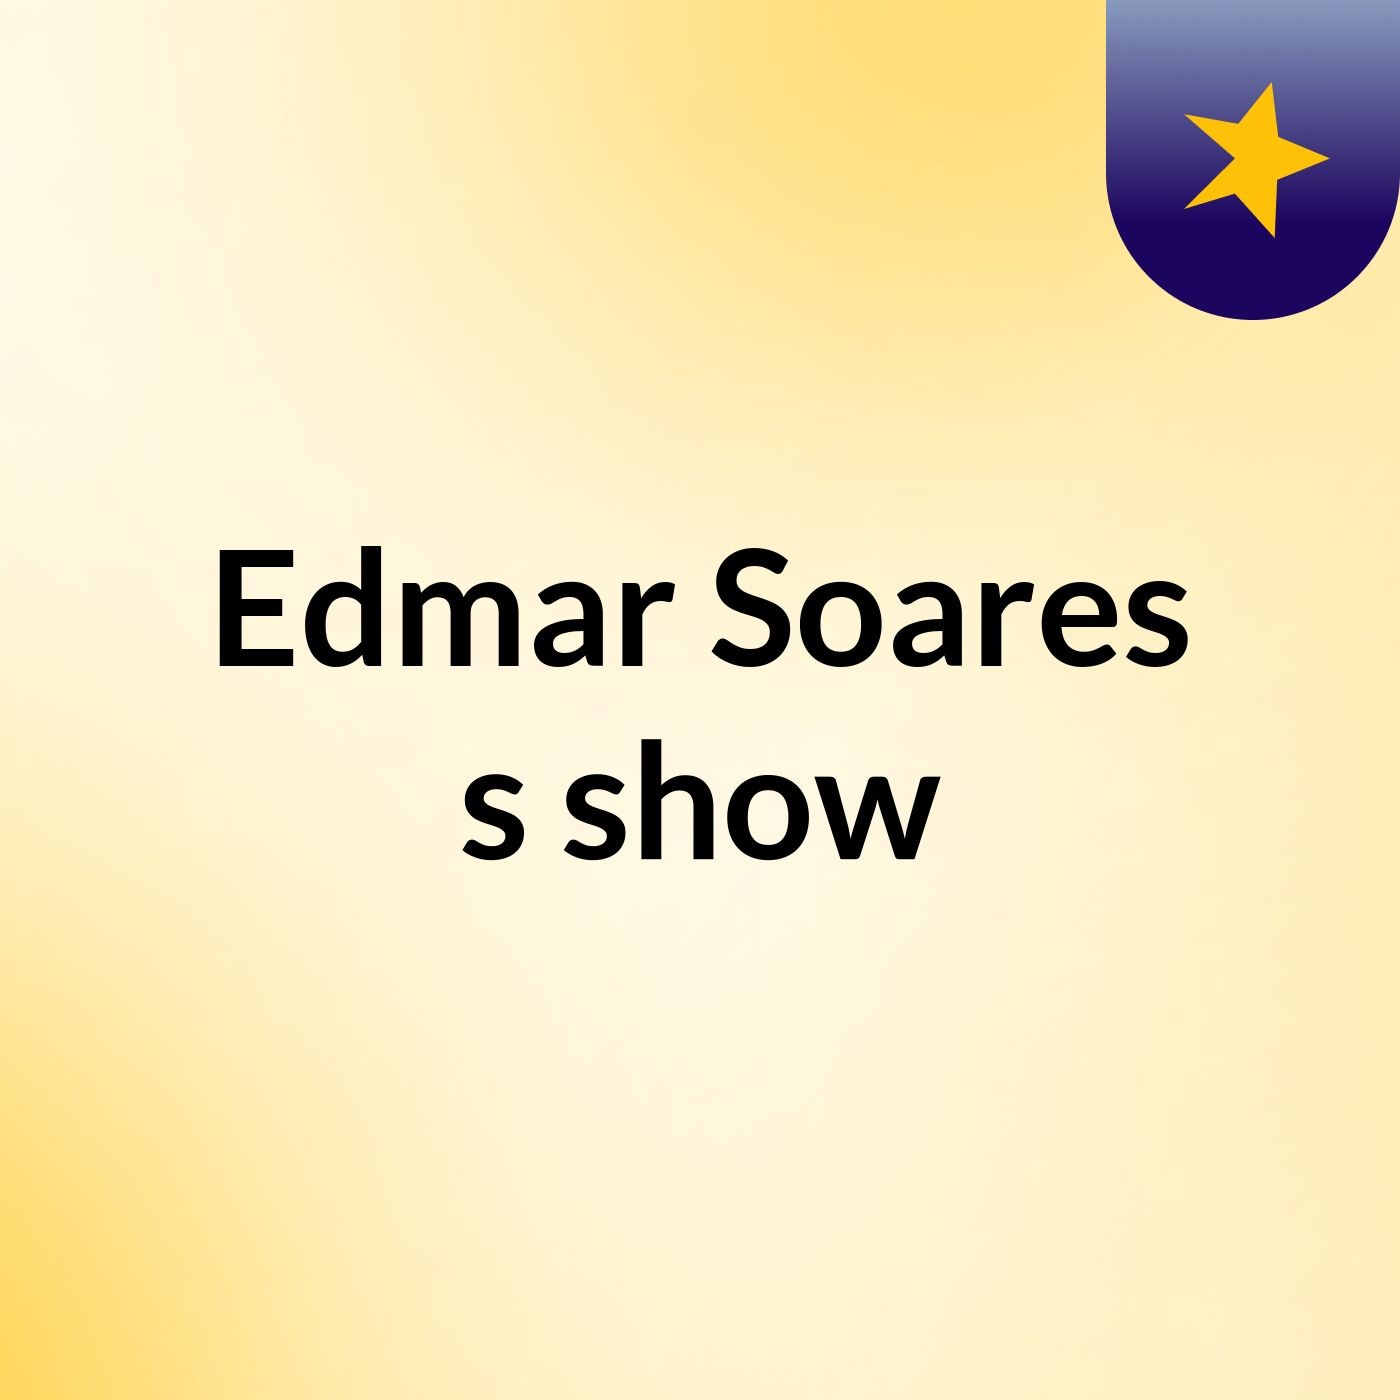 Edmar Soares's show